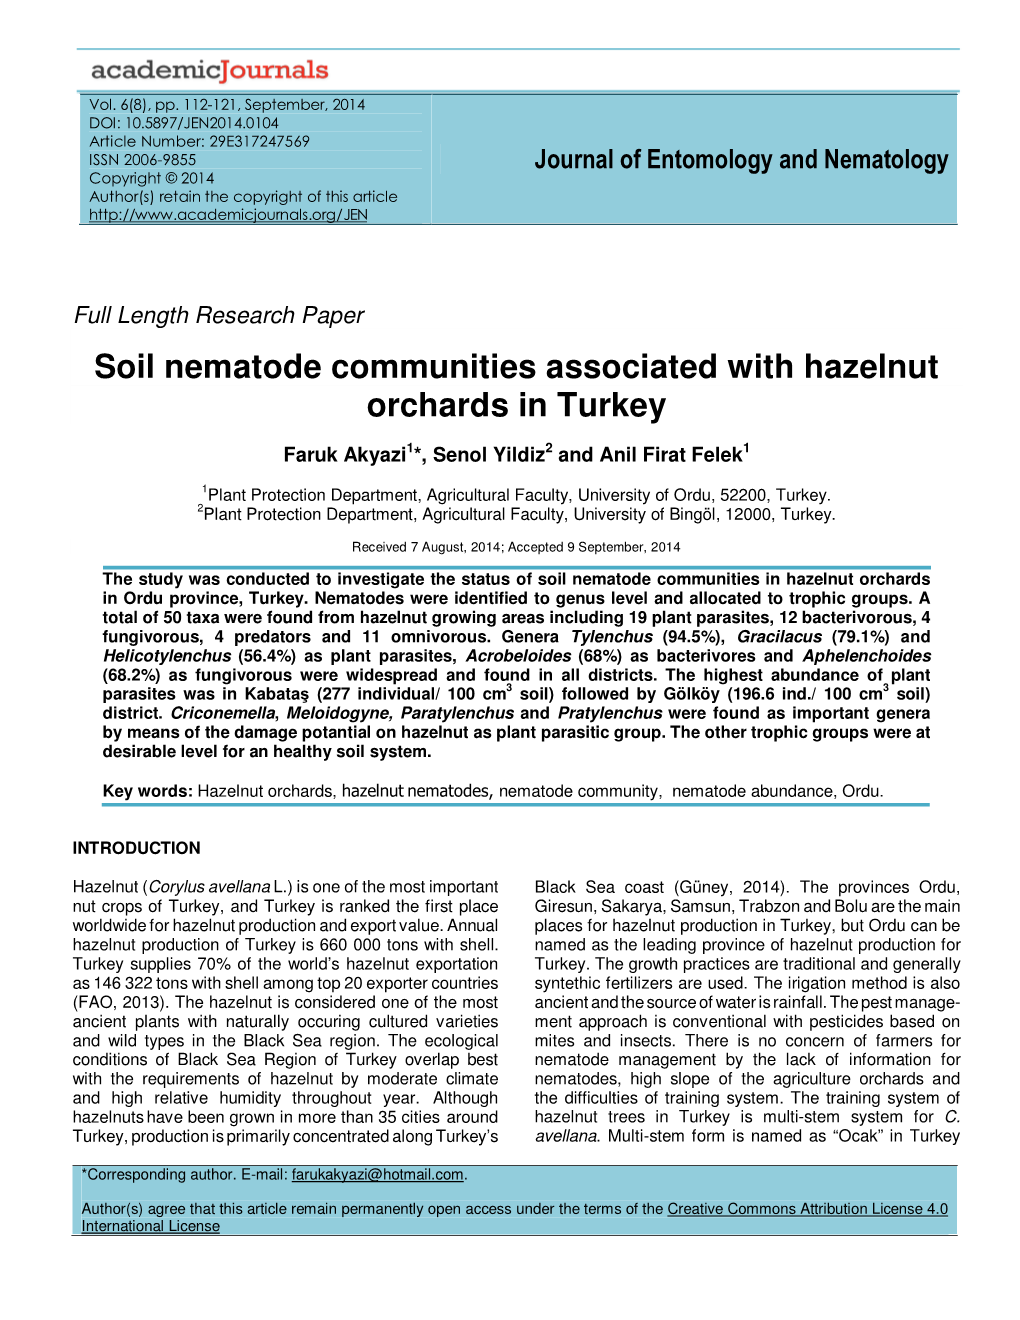 Soil Nematode Communities Associated with Hazelnut Orchards in Turkey